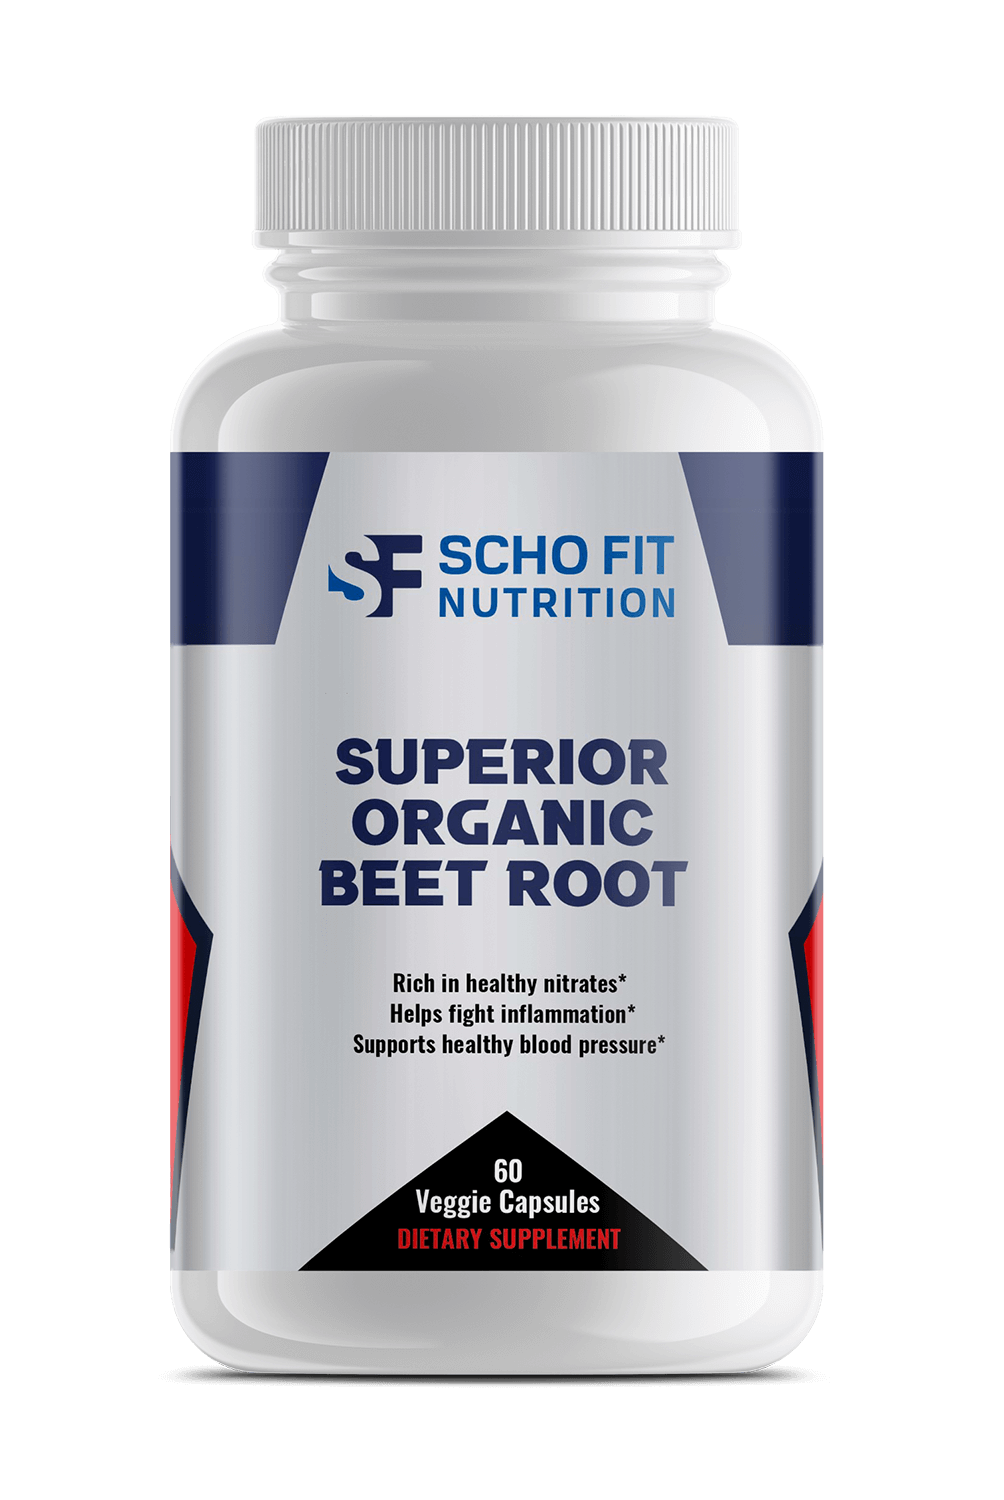 Superior Organic Beet Root